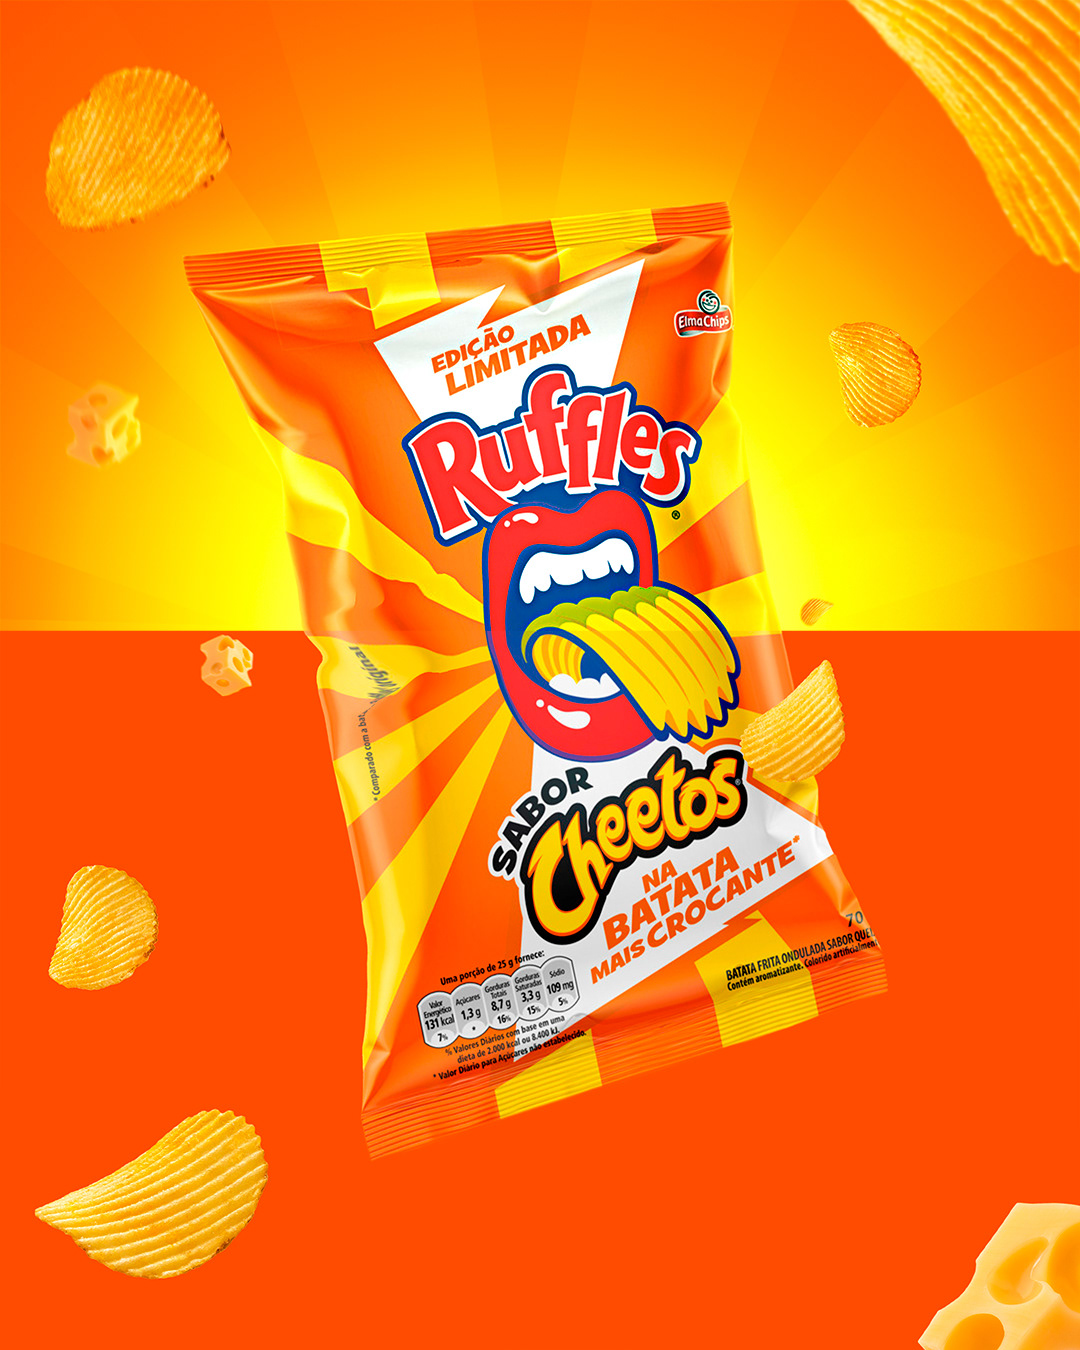 photoshop Adobe Photoshop Graphic Designer Advertising  ruffles Cheetos